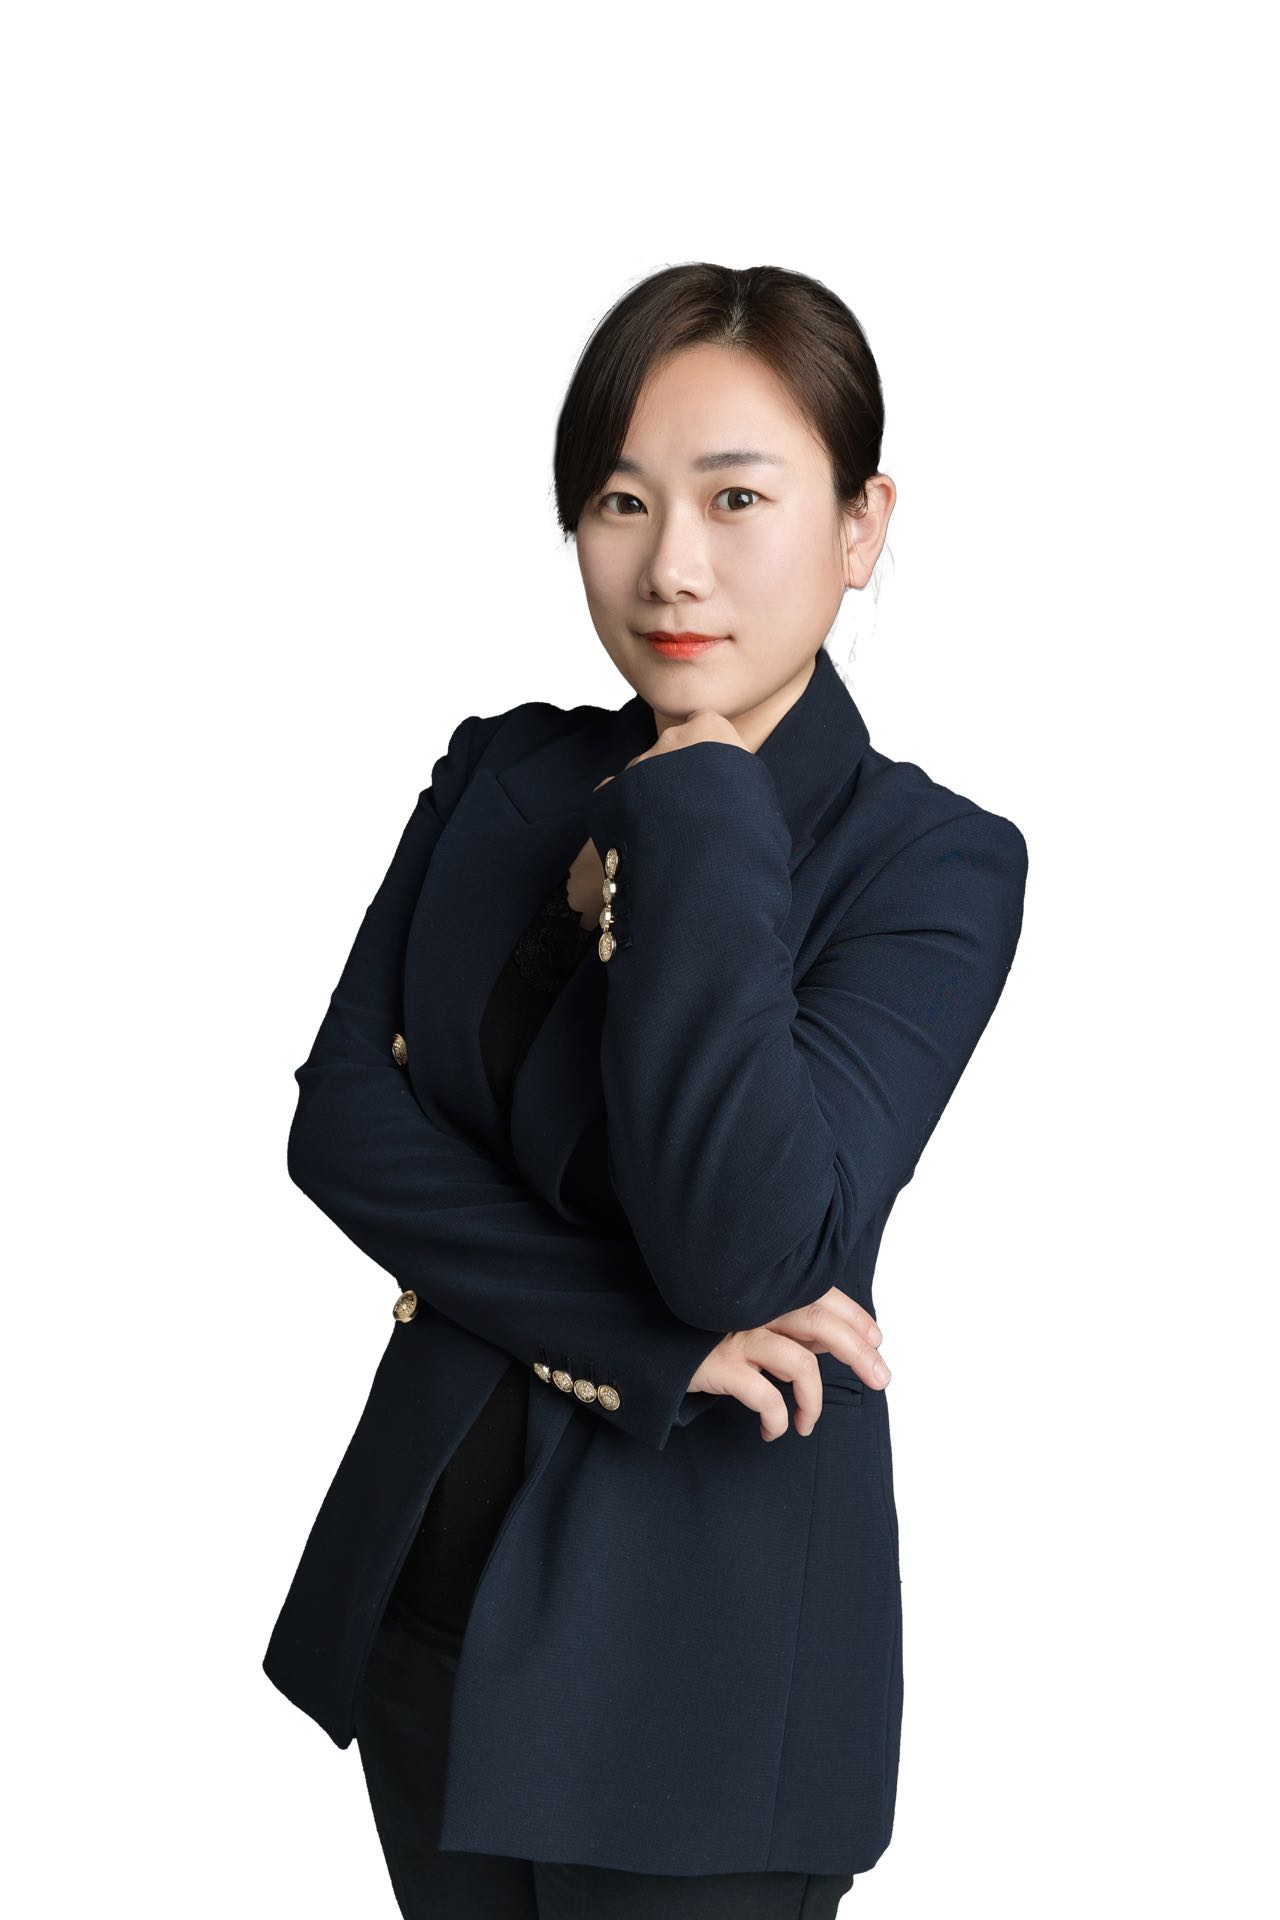 Wenjie Bonnie Zhou Real Estate Agent